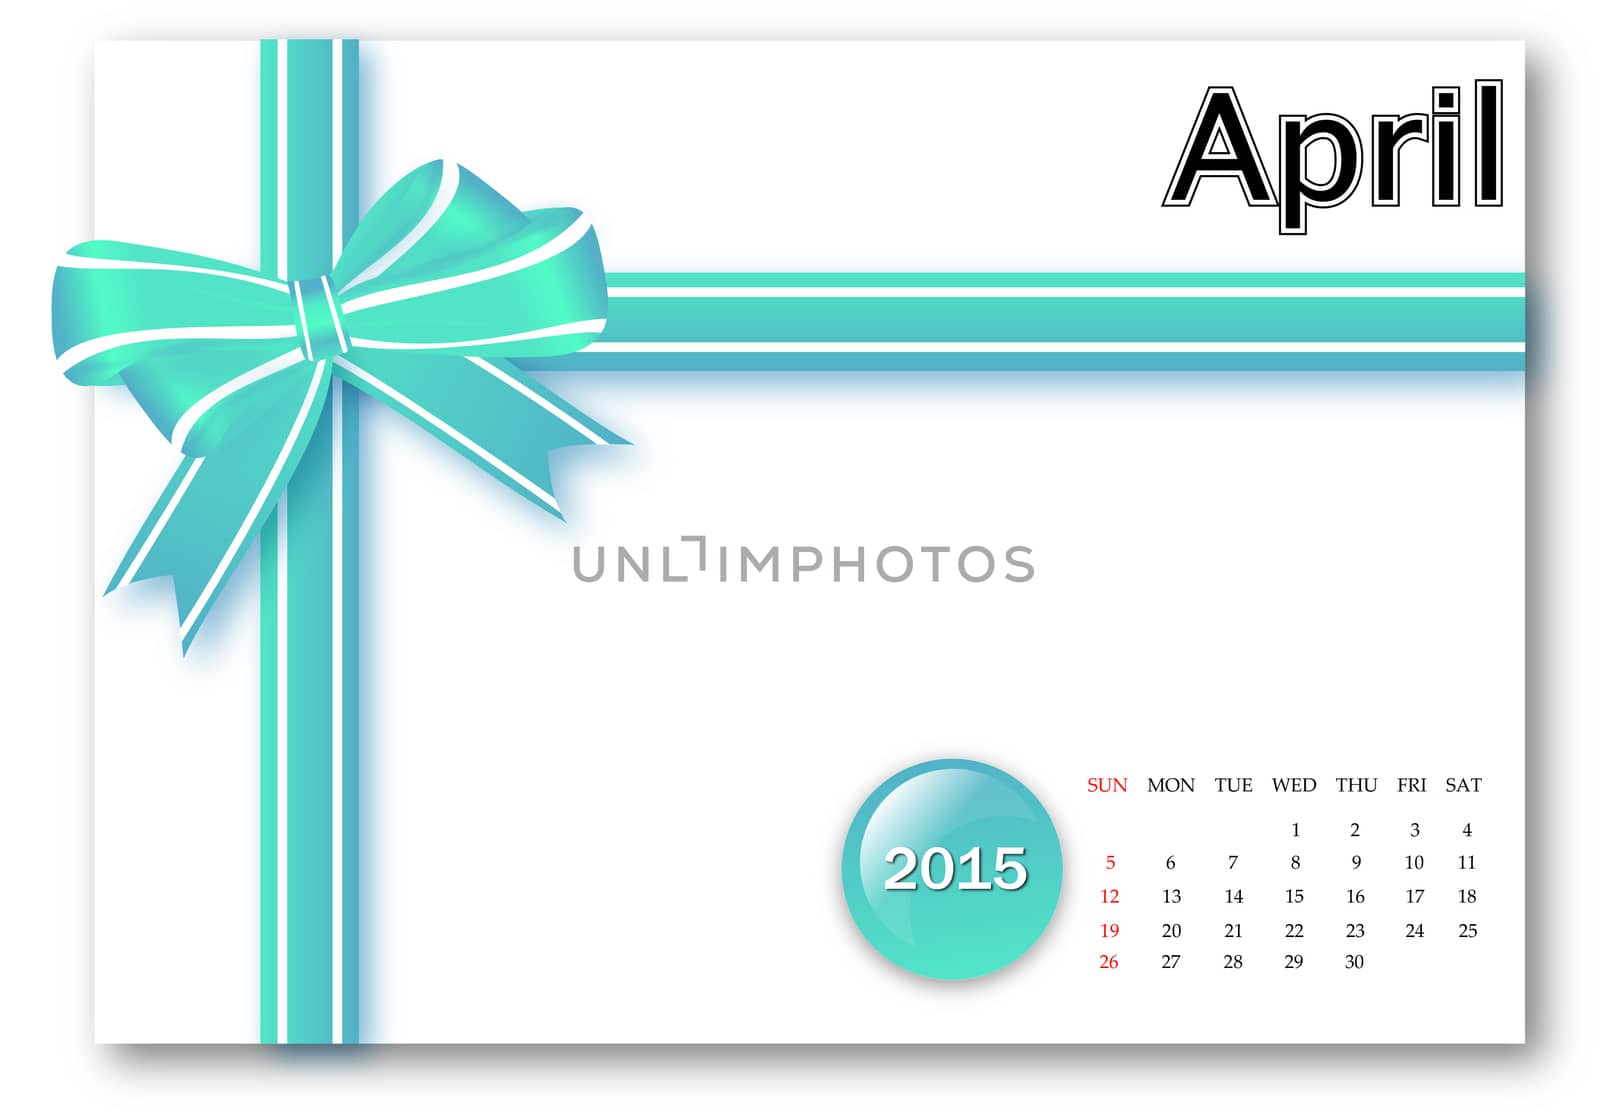 April 2015 - Calendar series with gift ribbon design